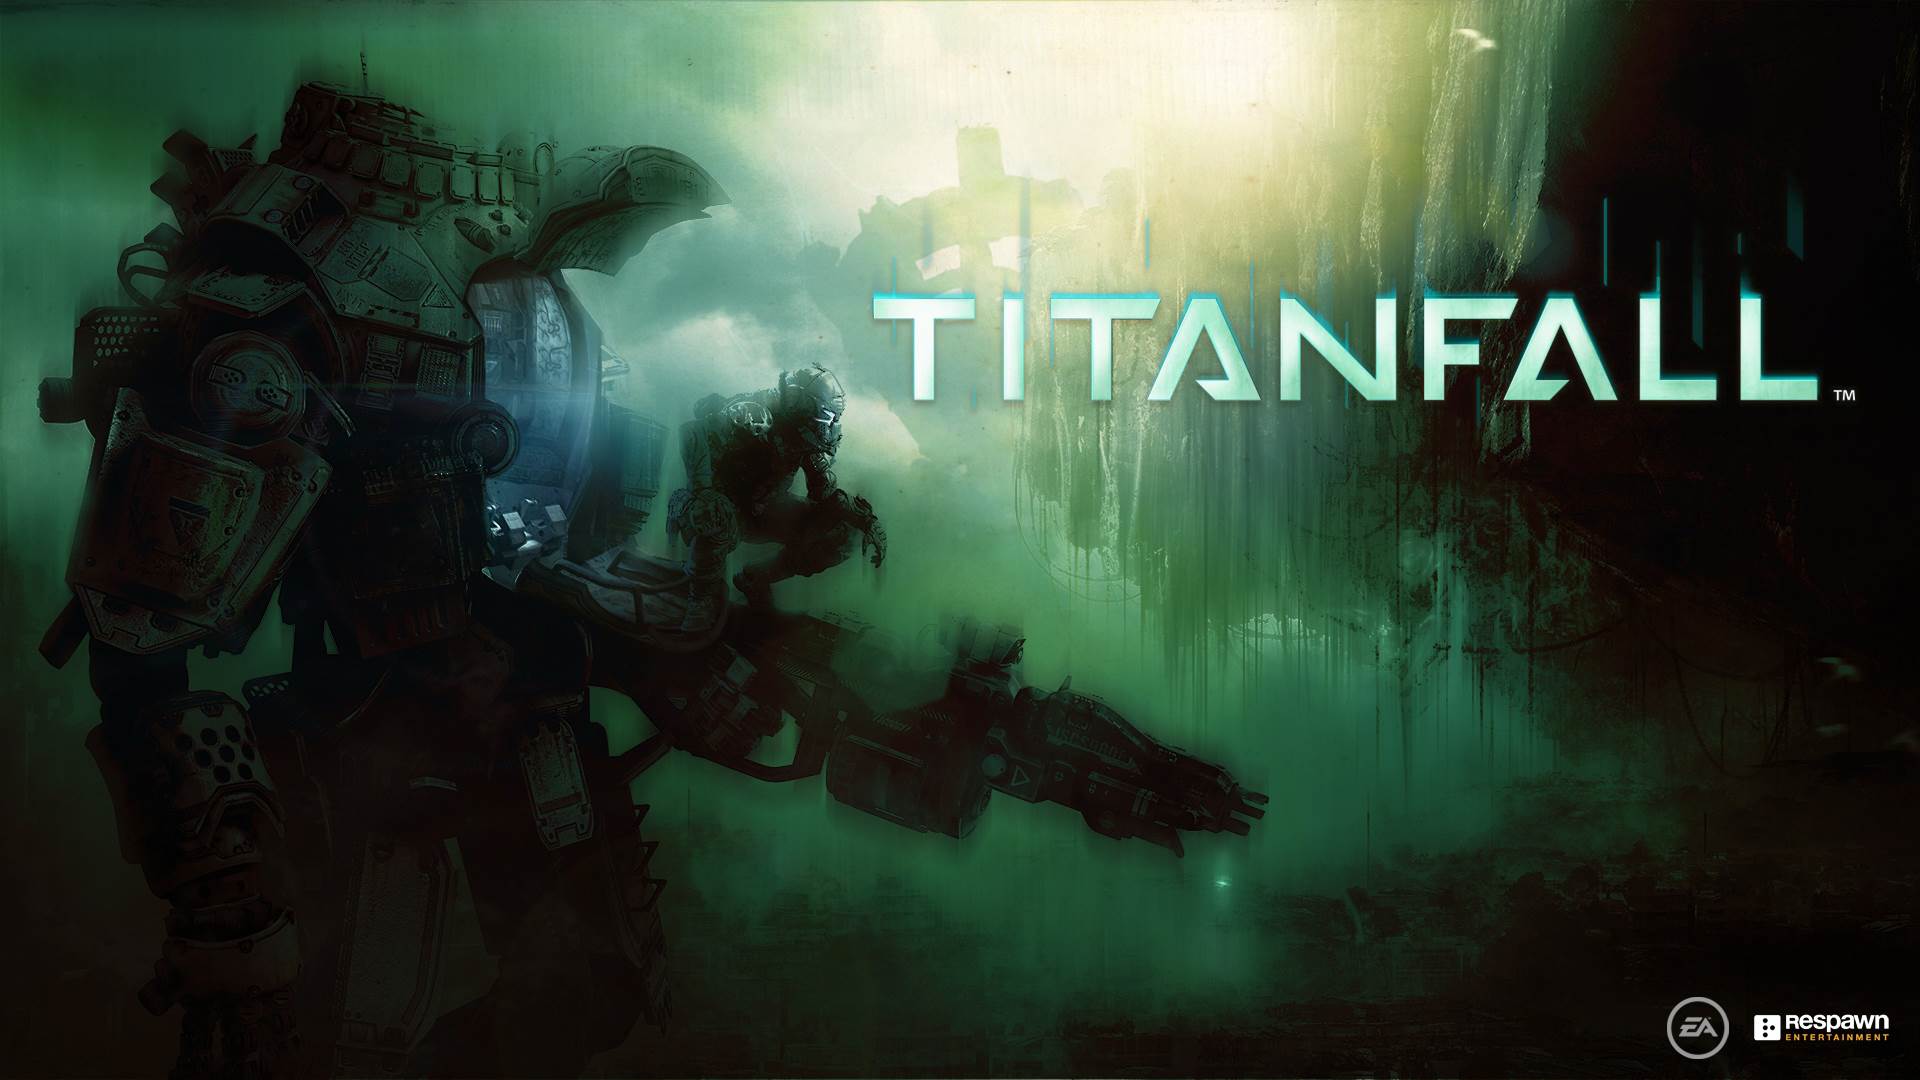 Titanfall Wallpaper In 1080p HD Gamingbolt Video Game News